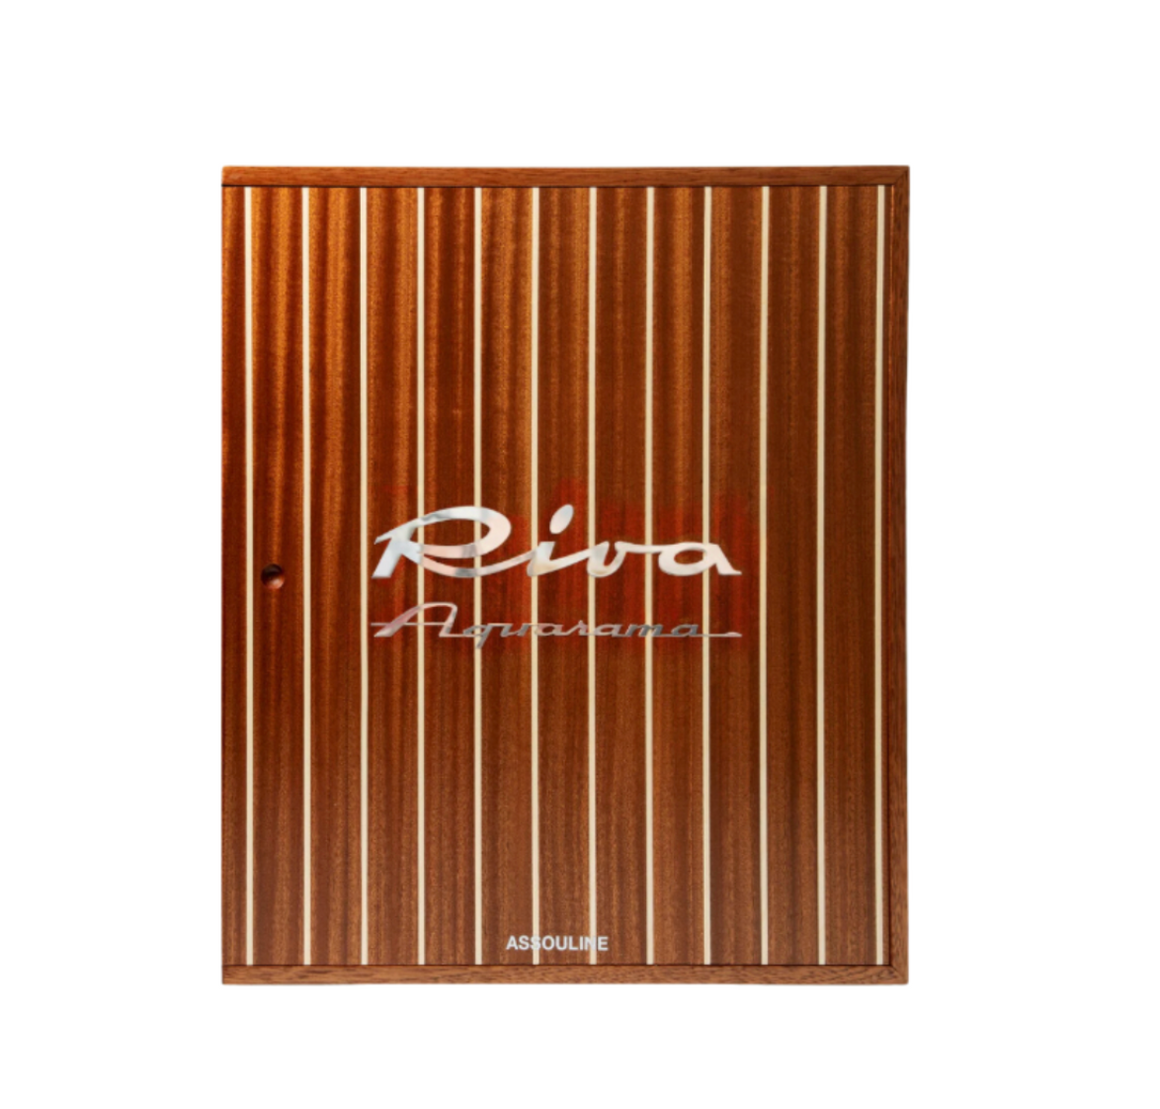 Riva Aquarama Coffee Table Book (Special Edition)